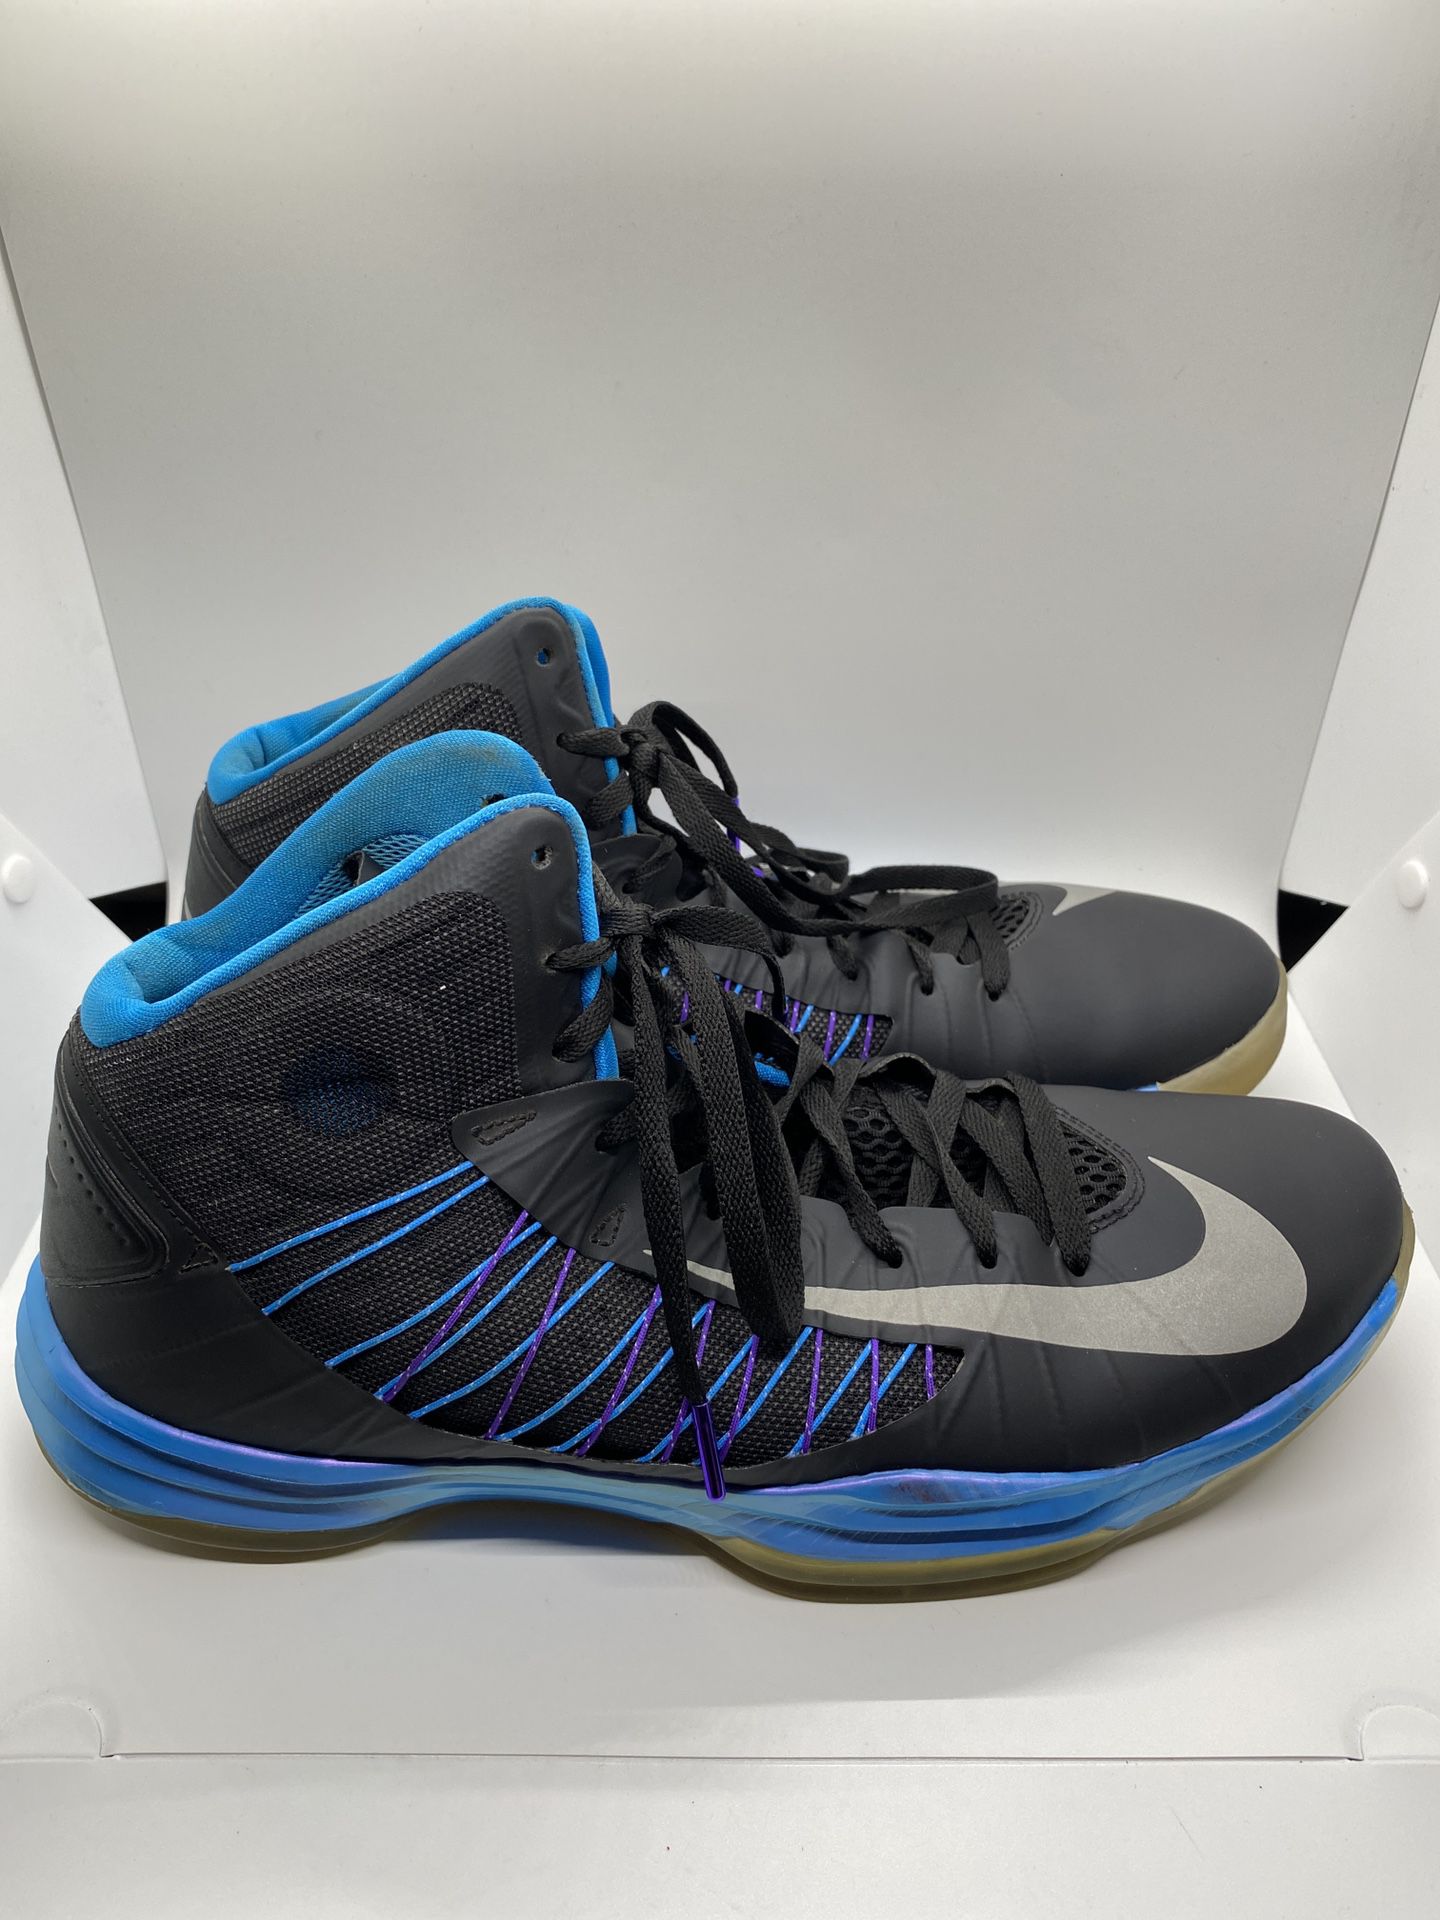 Nike Hyperdunk + 2012 Sport Pack Basketball Black Blue (524948-001) Men's Sz 14 for in Ramona, CA - OfferUp